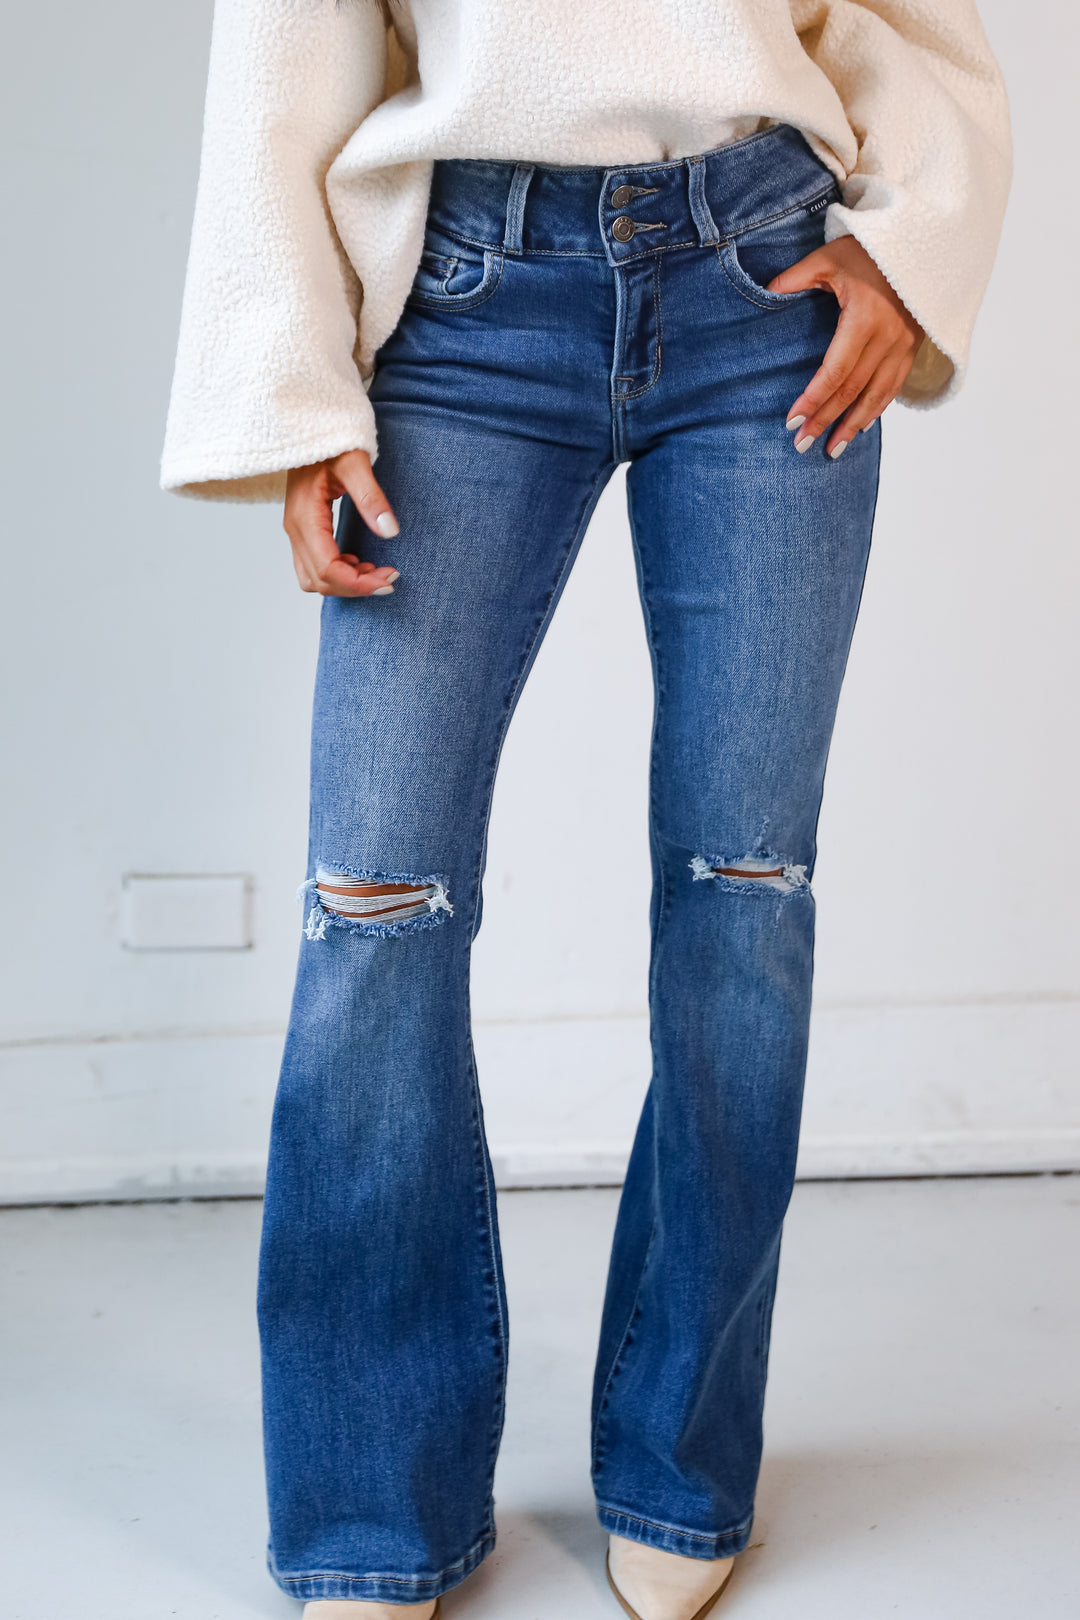 Medium Wash Distressed Flare Jeans close up